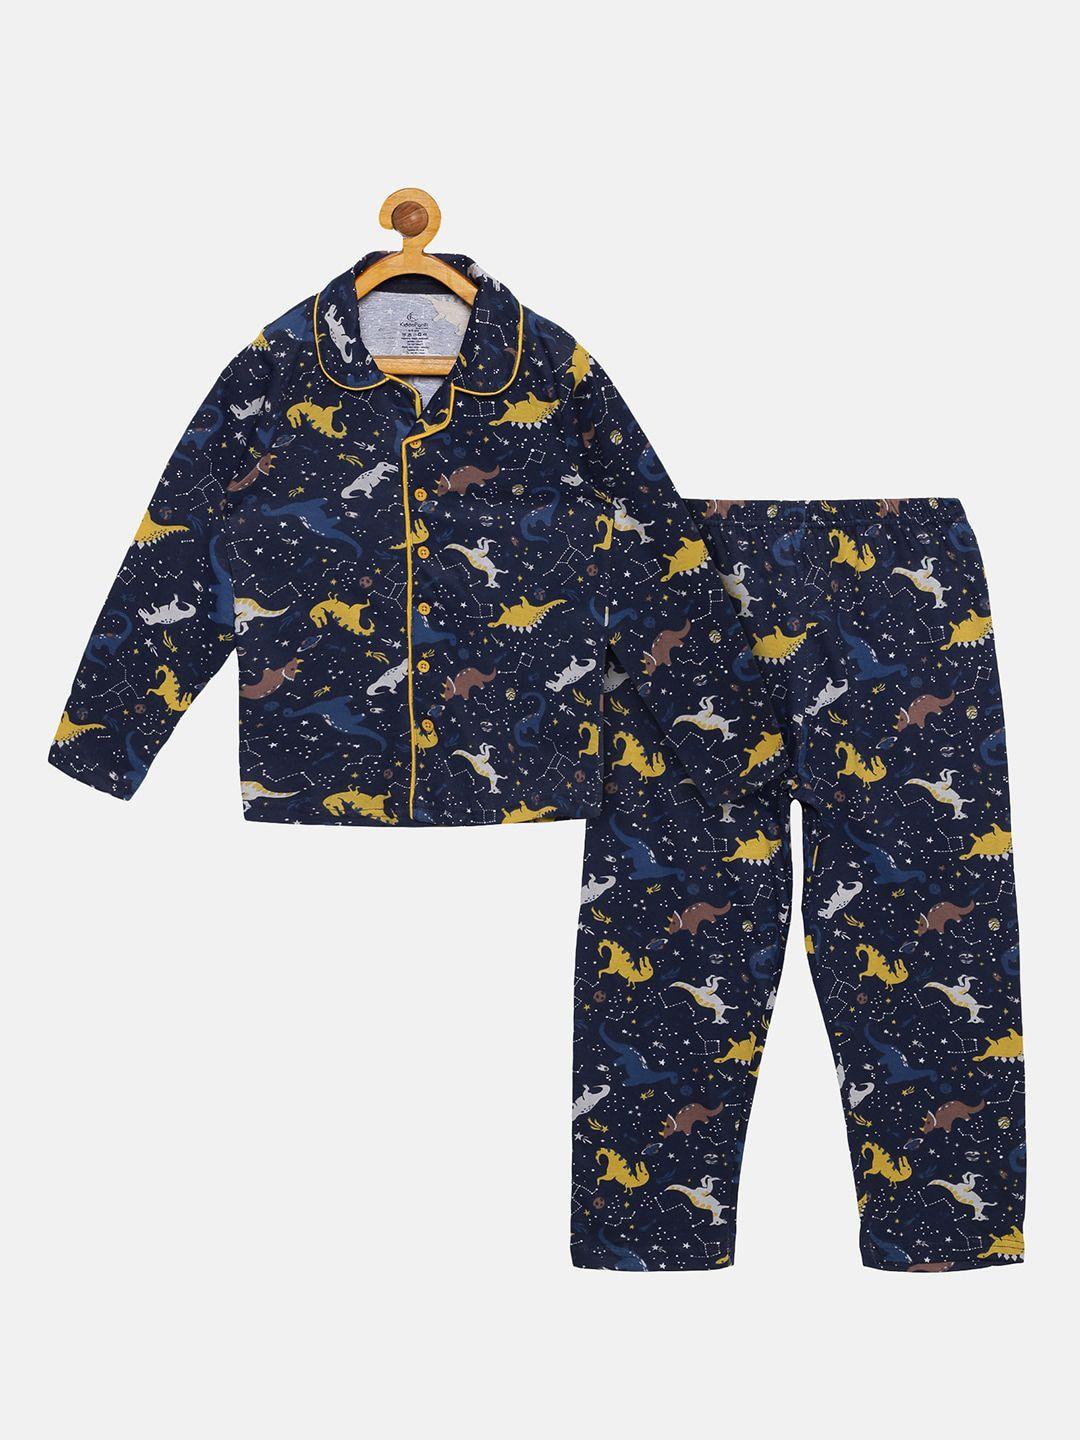 kiddopanti boys navy blue & yellow printed pure cotton night suit